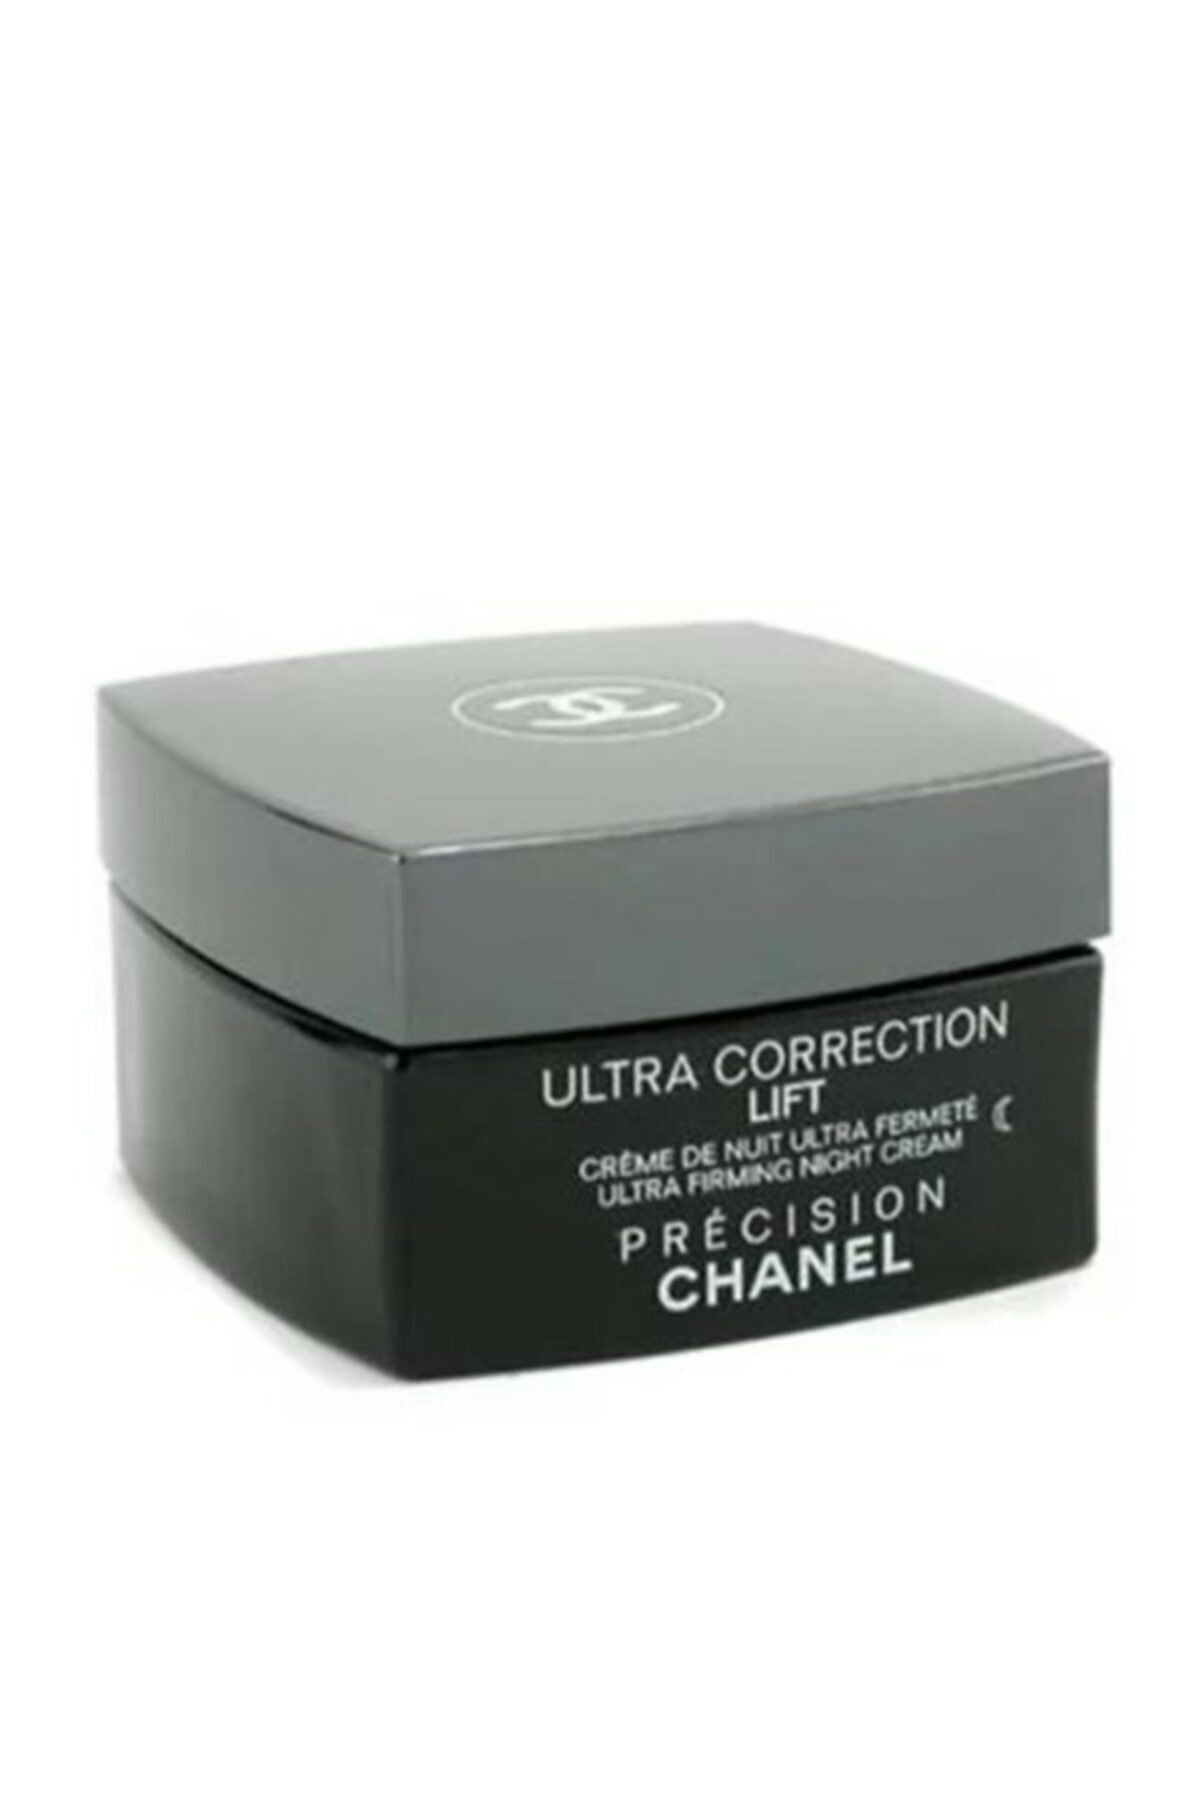 Chanel Ultra Correction Lift Gece Kremi 50 G 3145891432305